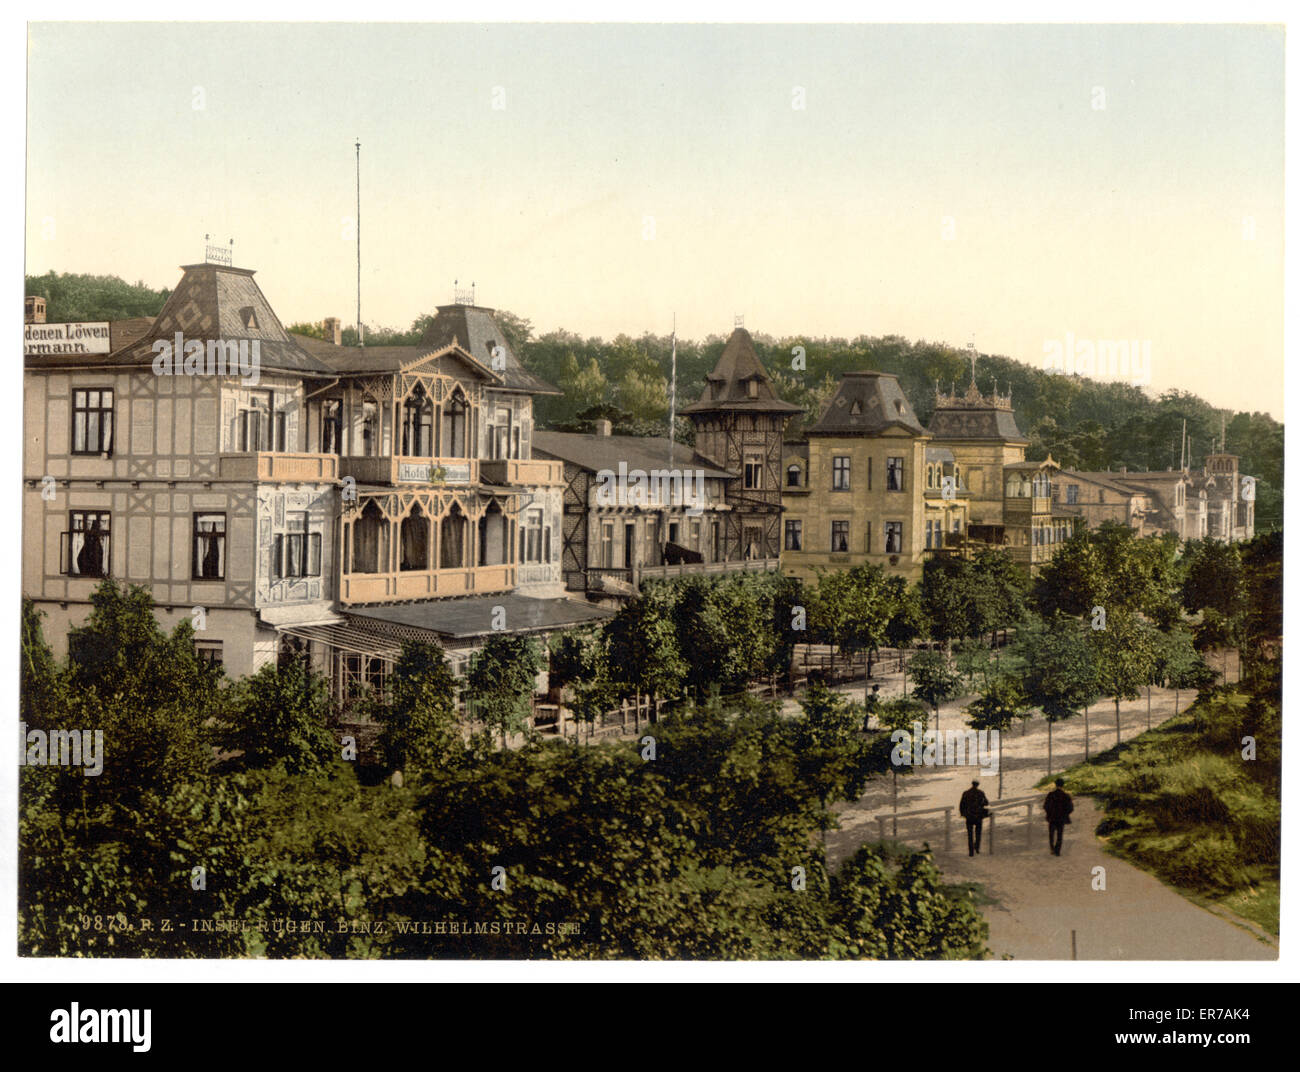 Wilhelmstrasse, Binz, Isle of Rugen, Germany. Date between ca. 1890 and ca. 1900. Stock Photo